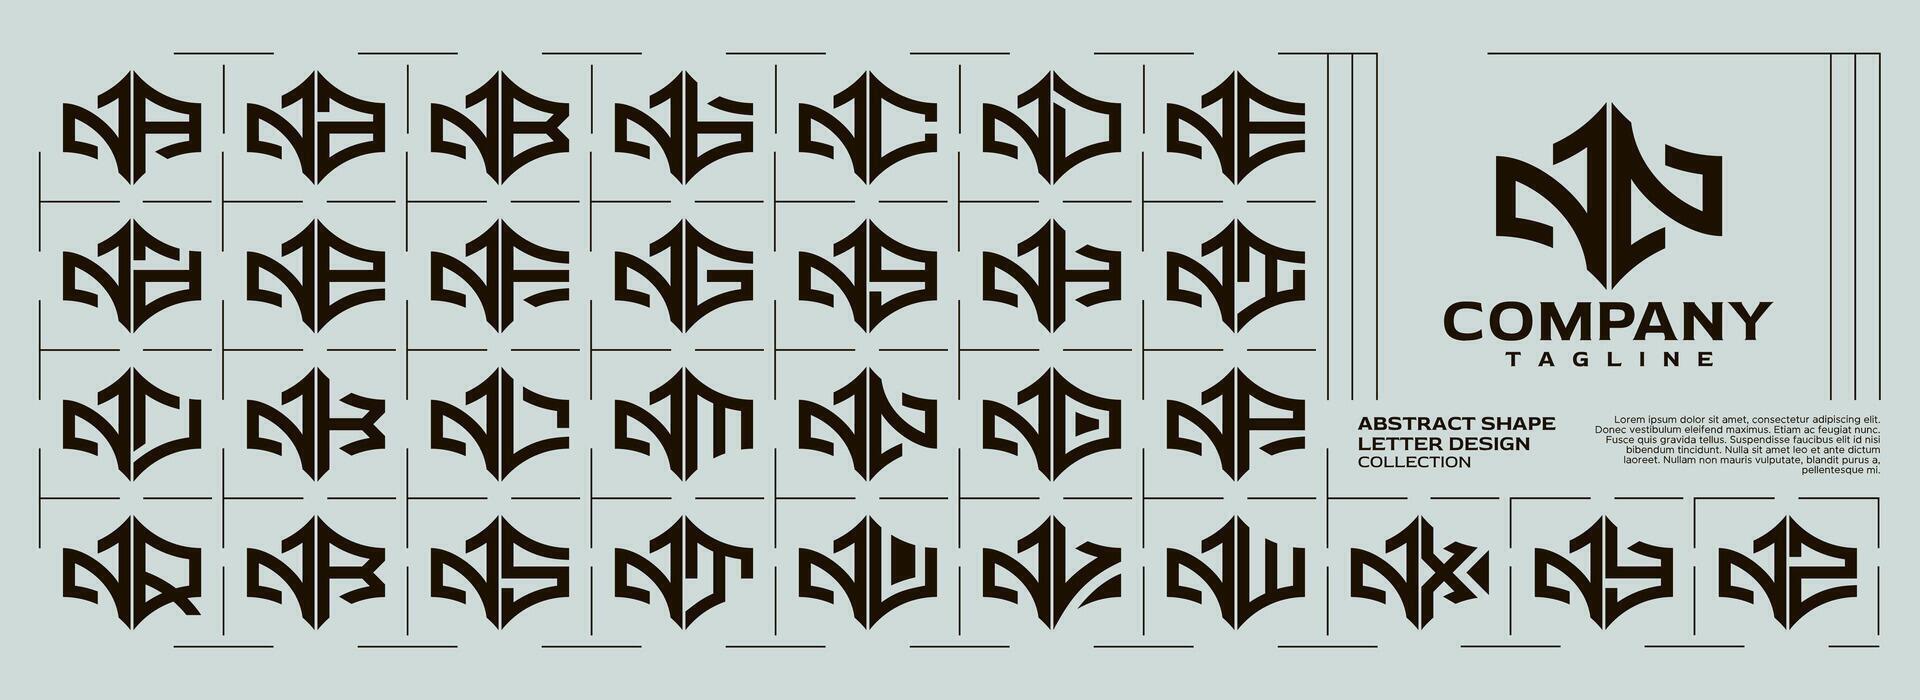 Luxury abstract shape letter N NN logo set vector